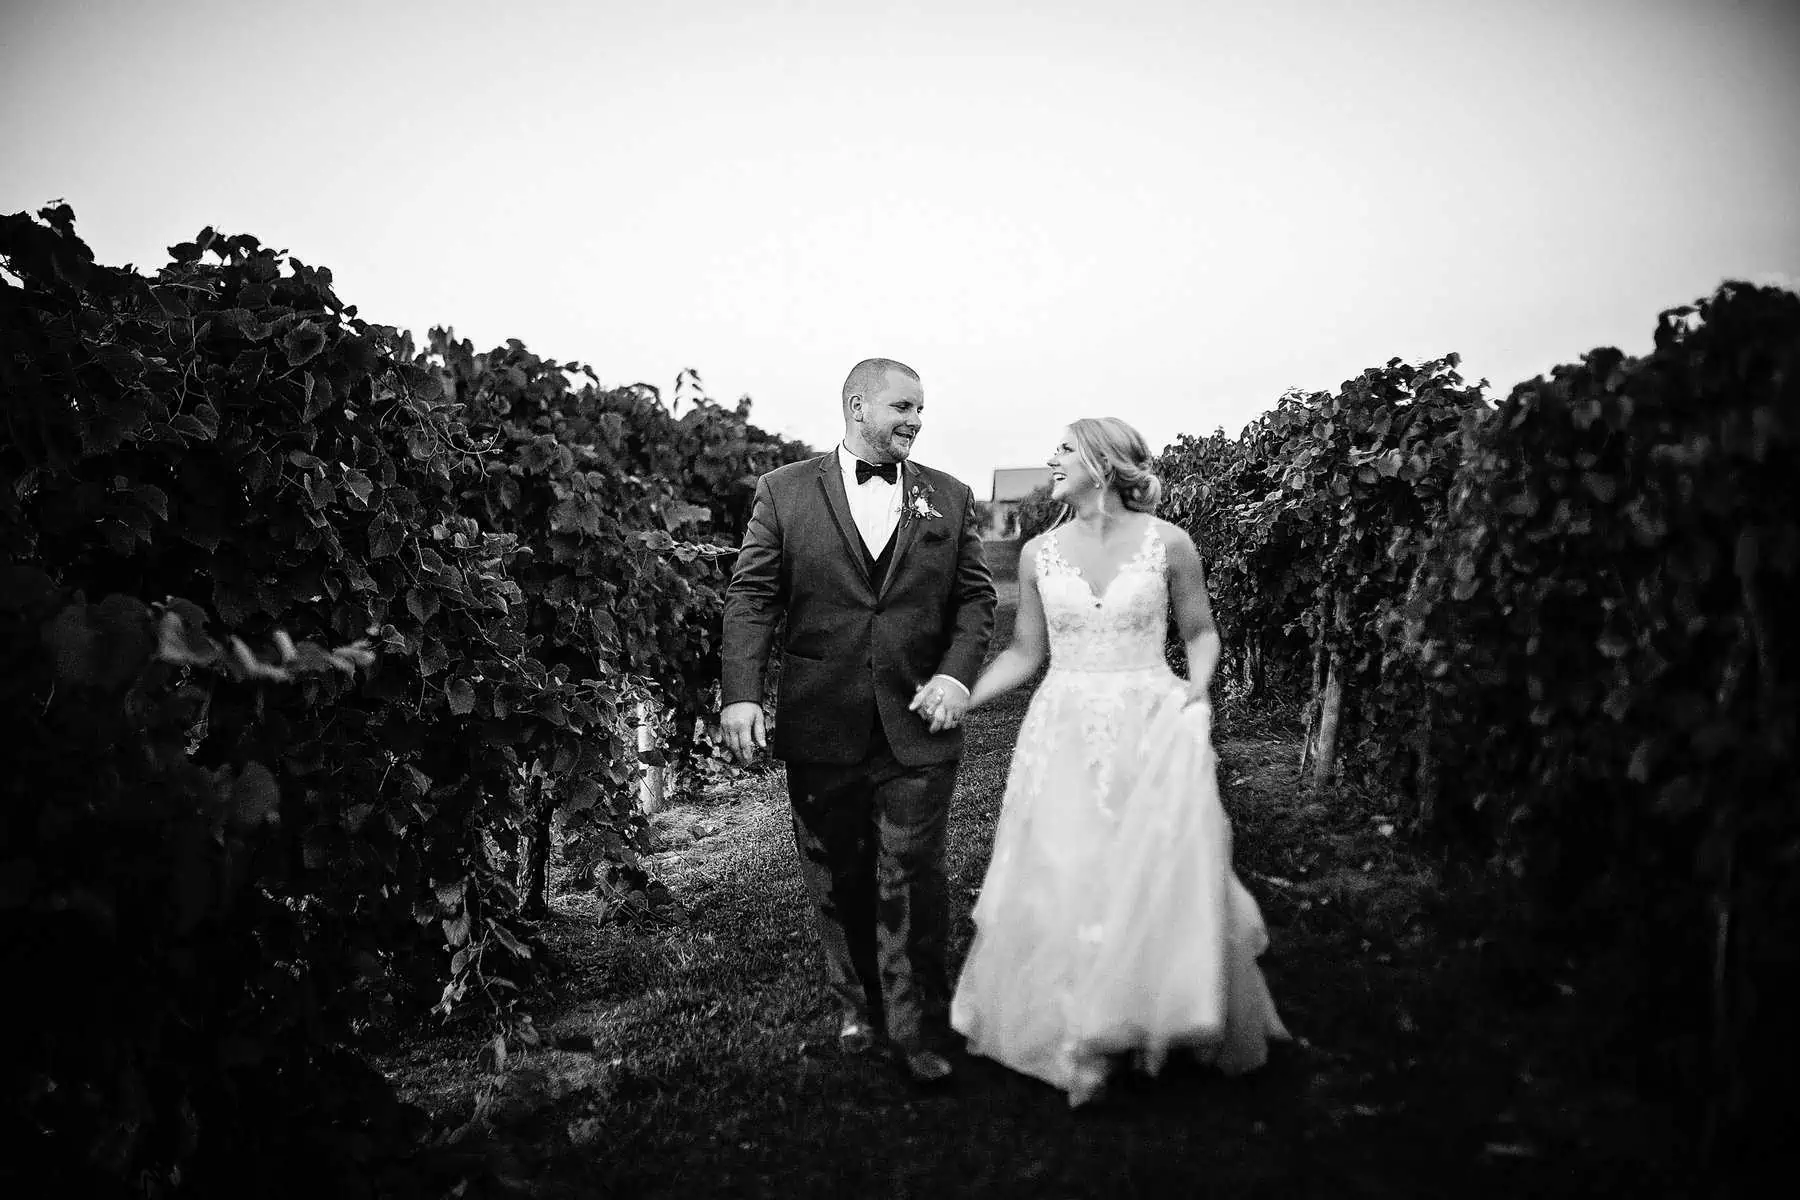 A bride and groom walking through a vineyard.